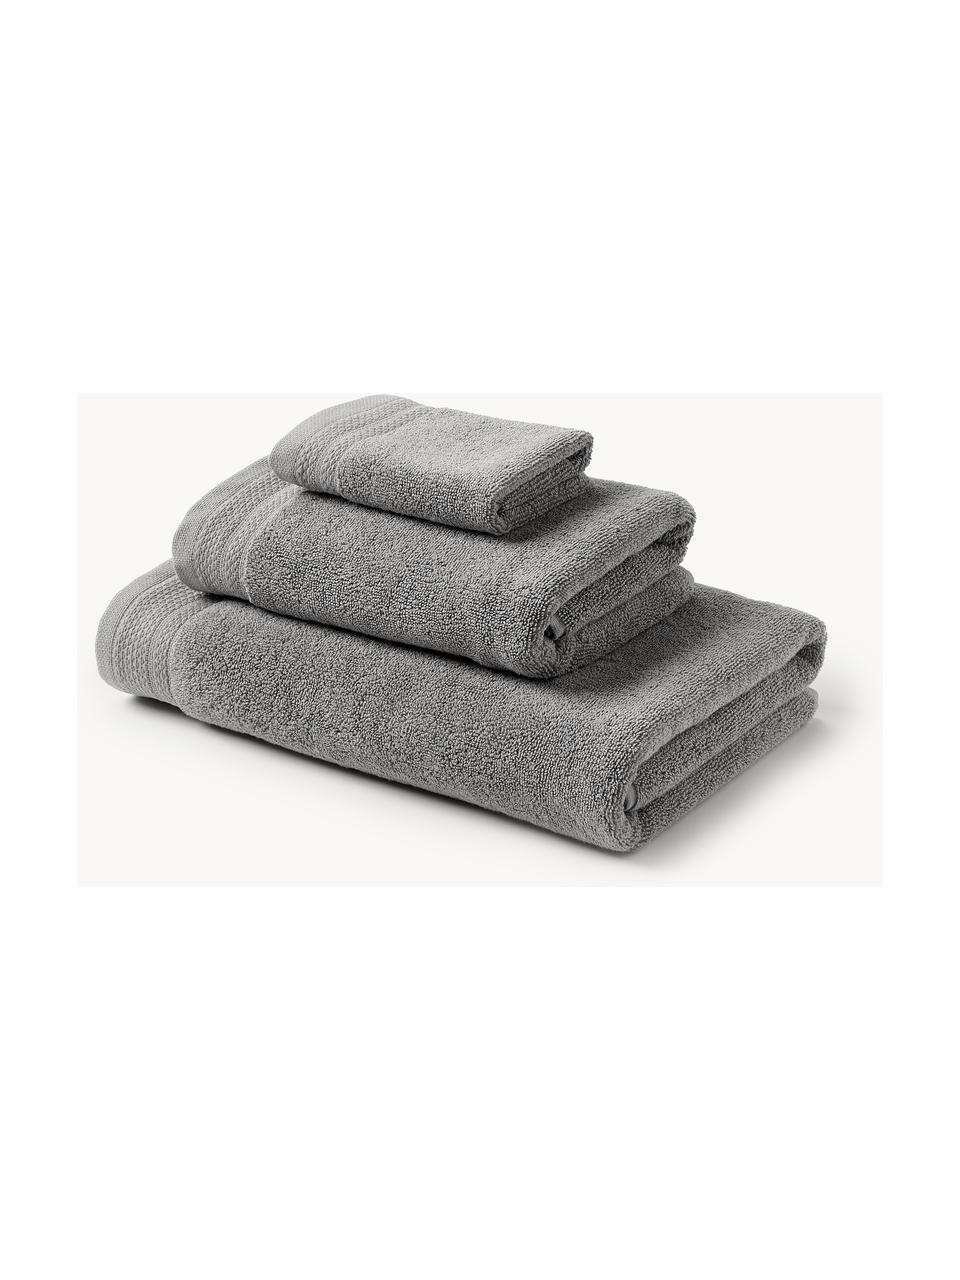 Set de toallas de algodón ecológico Premium, tamaños diferentes, 100% algodón ecológico con certificado GOTS (por GCL International, GCL-300517)
Gramaje superior 600 g/m², Gris oscuro, Set de 4 (toallas lavabo y toallas de ducha)